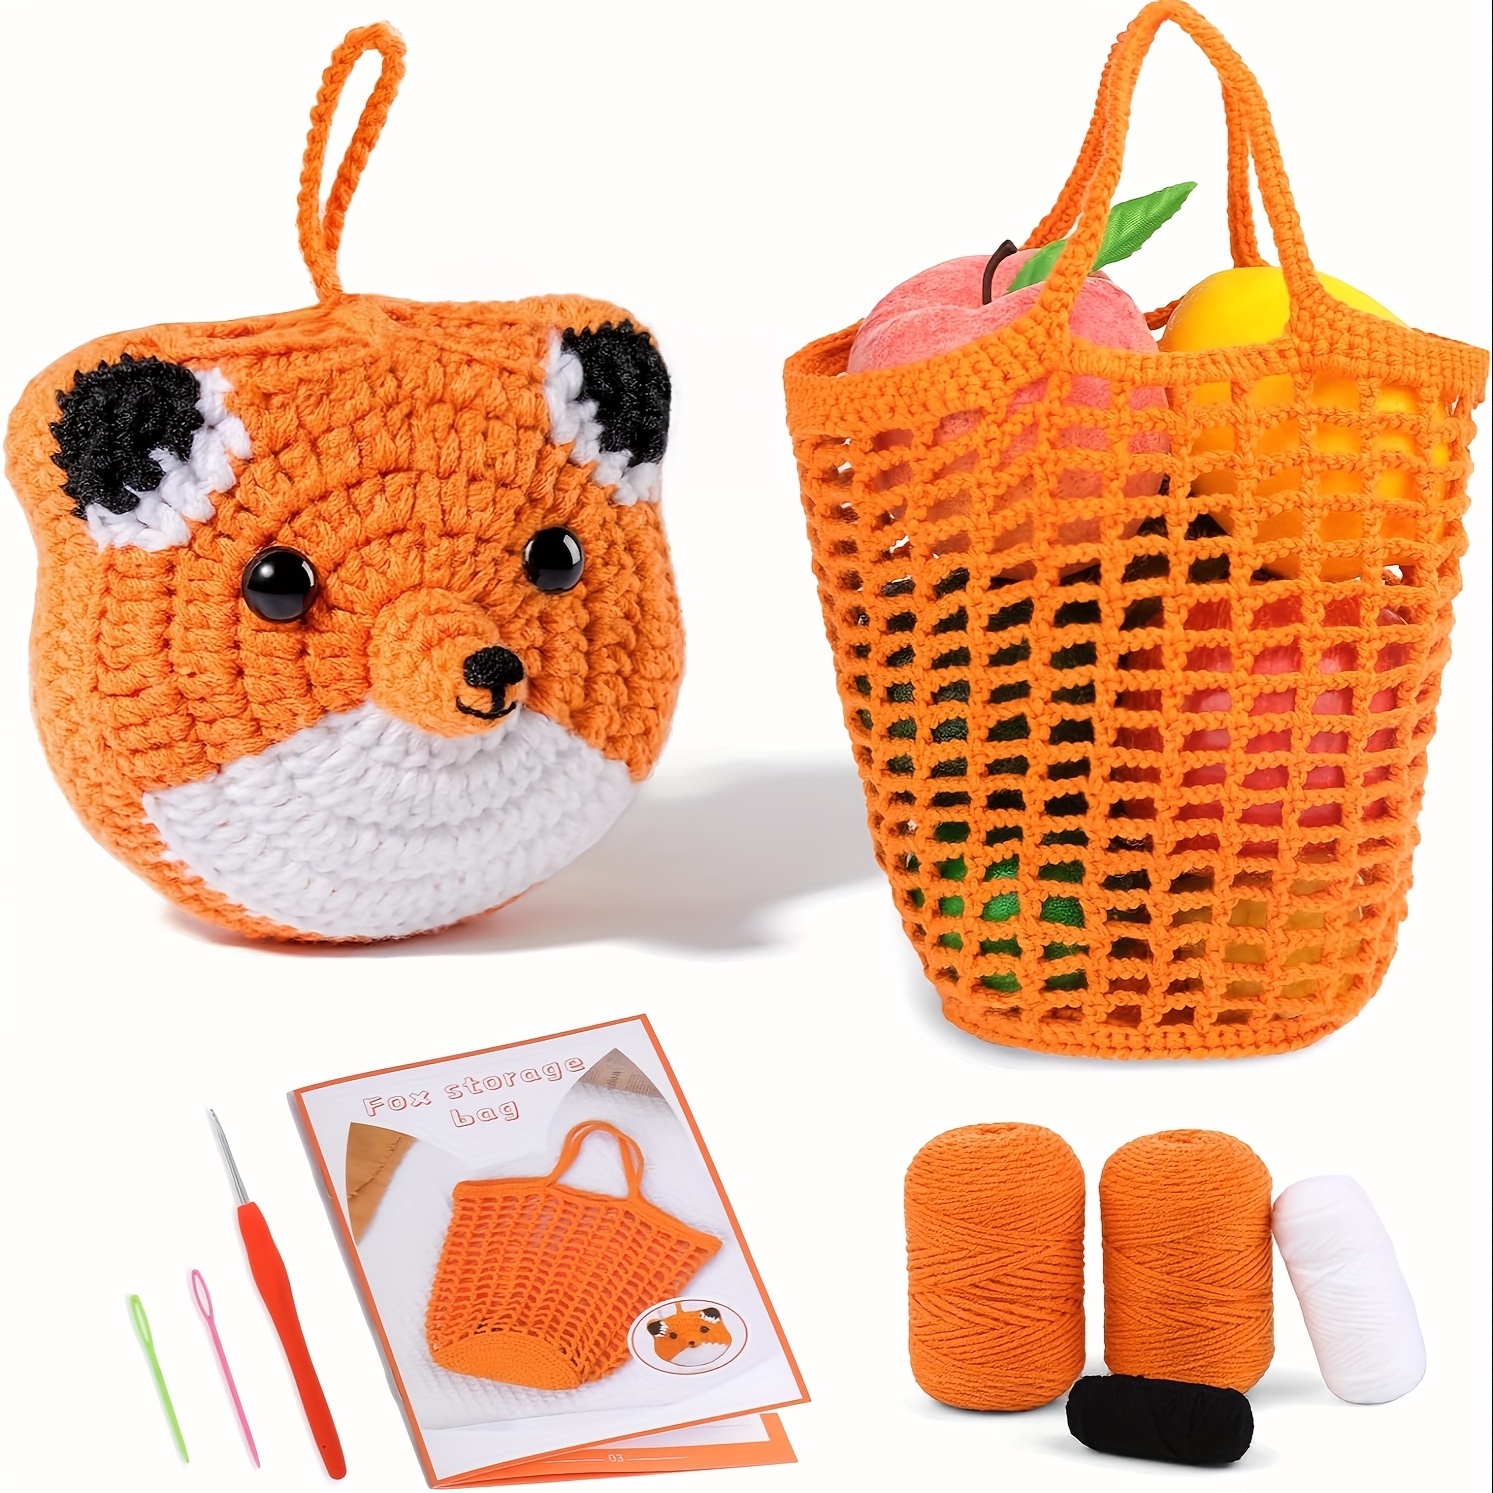 

Diy Fox Crochet Bag Kit For Beginners - Complete Starter Set With Yarn, Step-by-step Instructions & Shoulder Strap